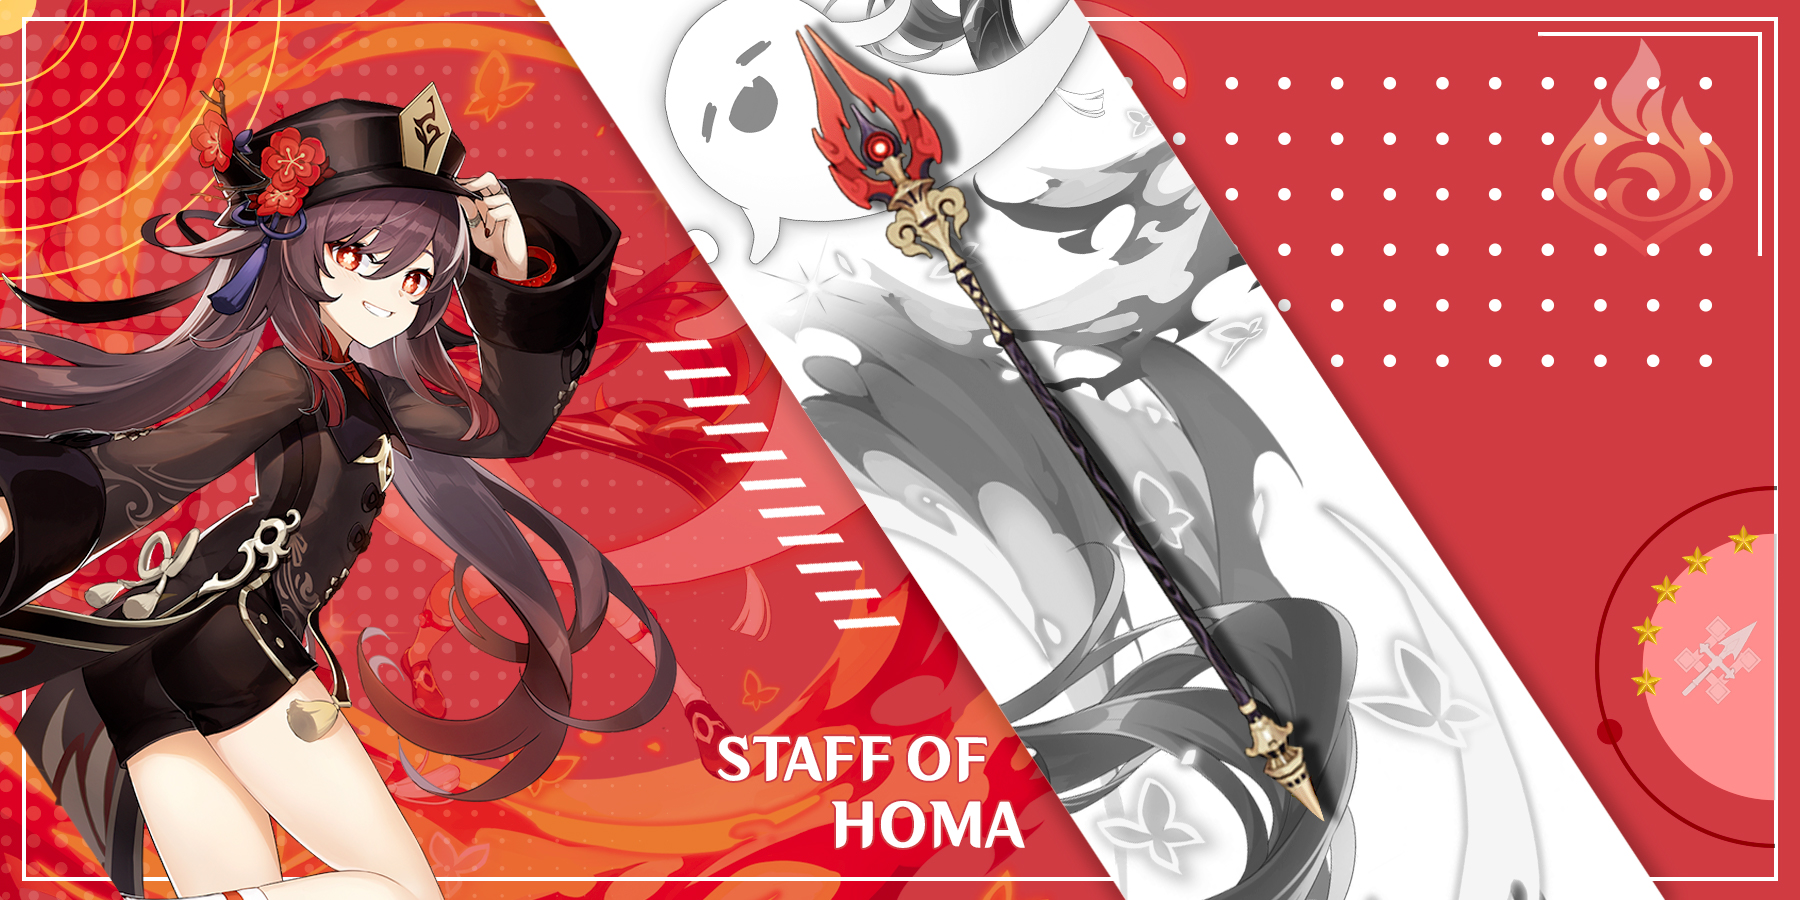 hu-tao-using-staff-of-homa-in-genshin-impact